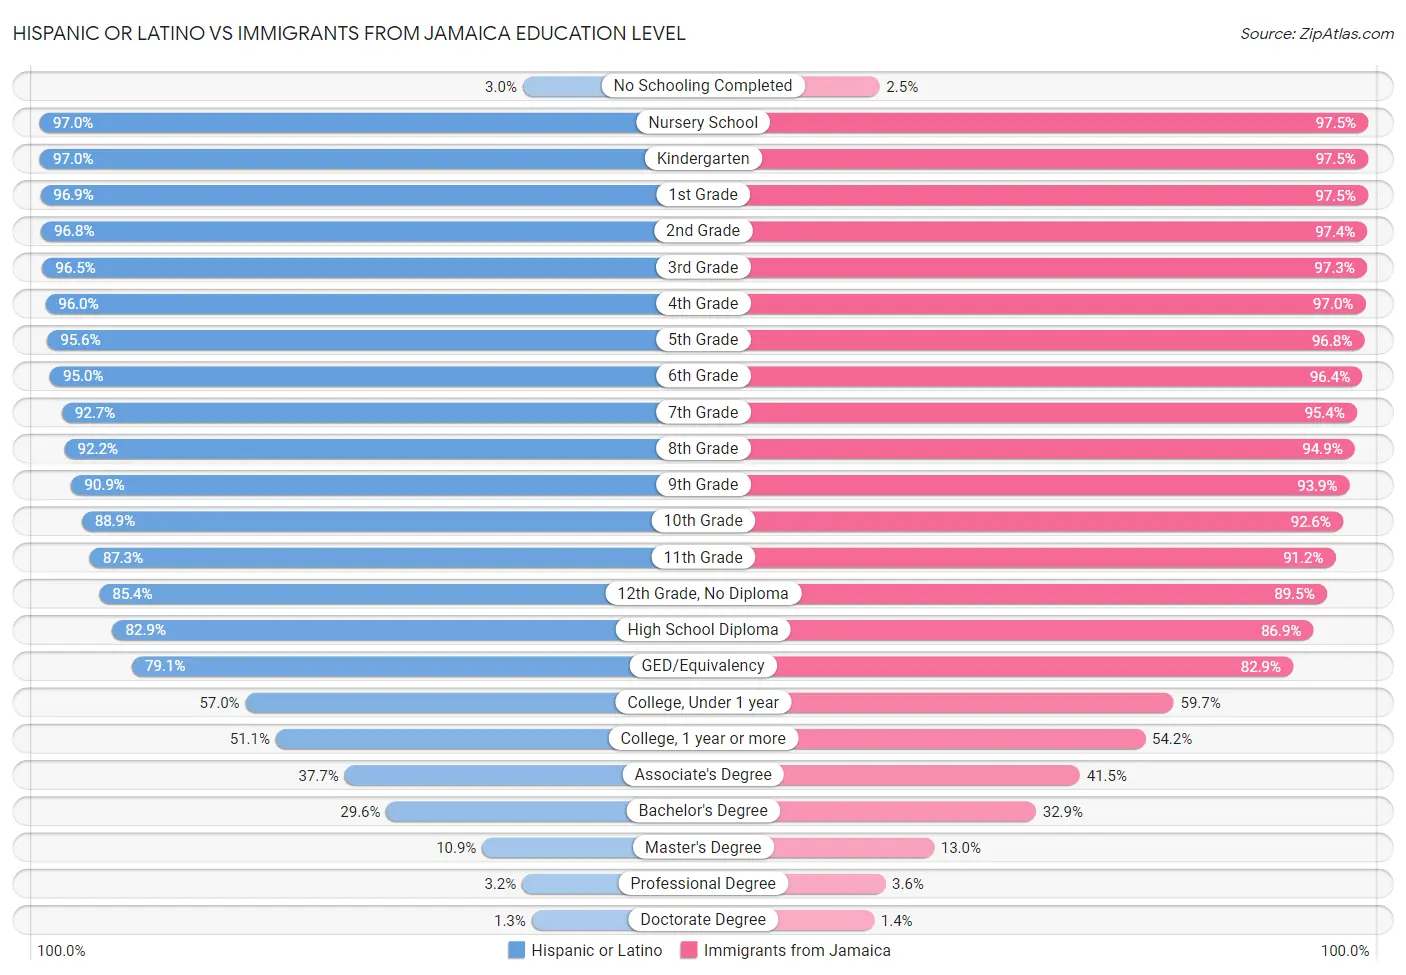 Hispanic or Latino vs Immigrants from Jamaica Education Level